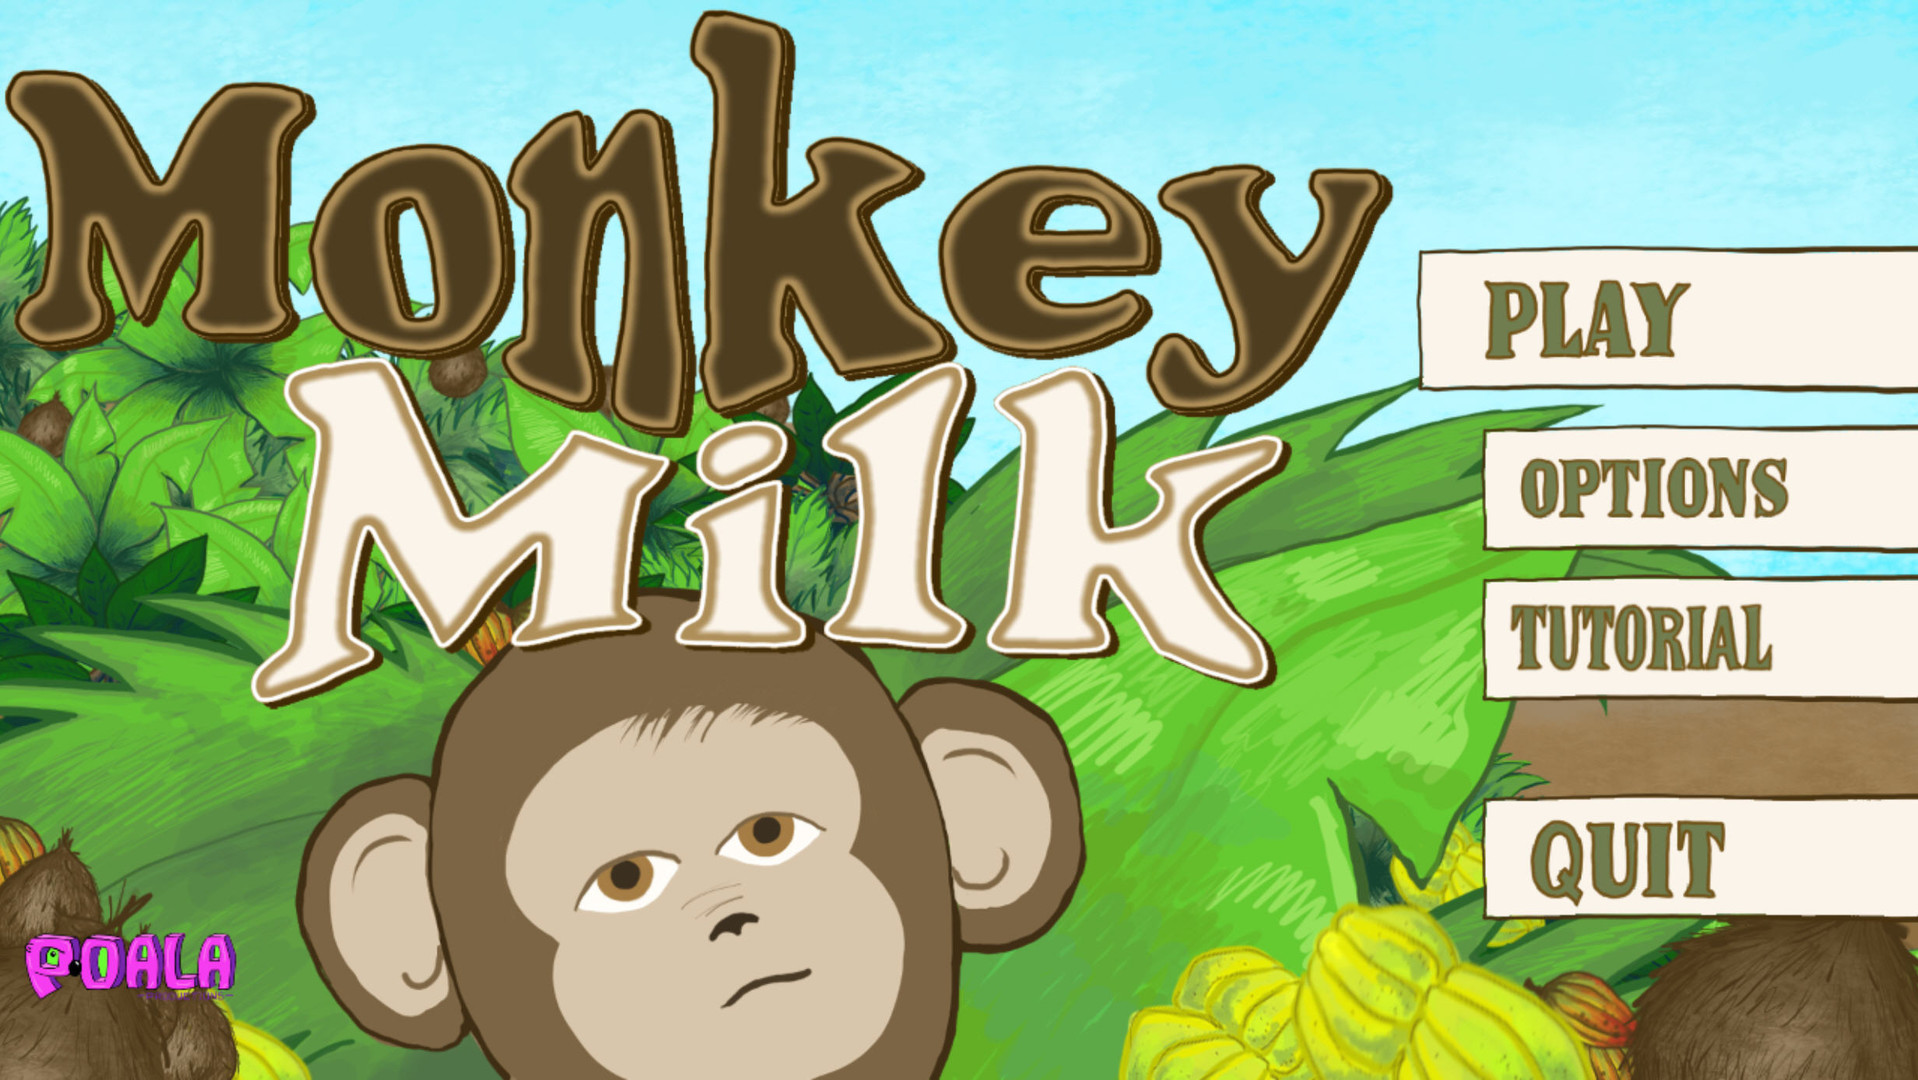 Monkey Milk Free Download